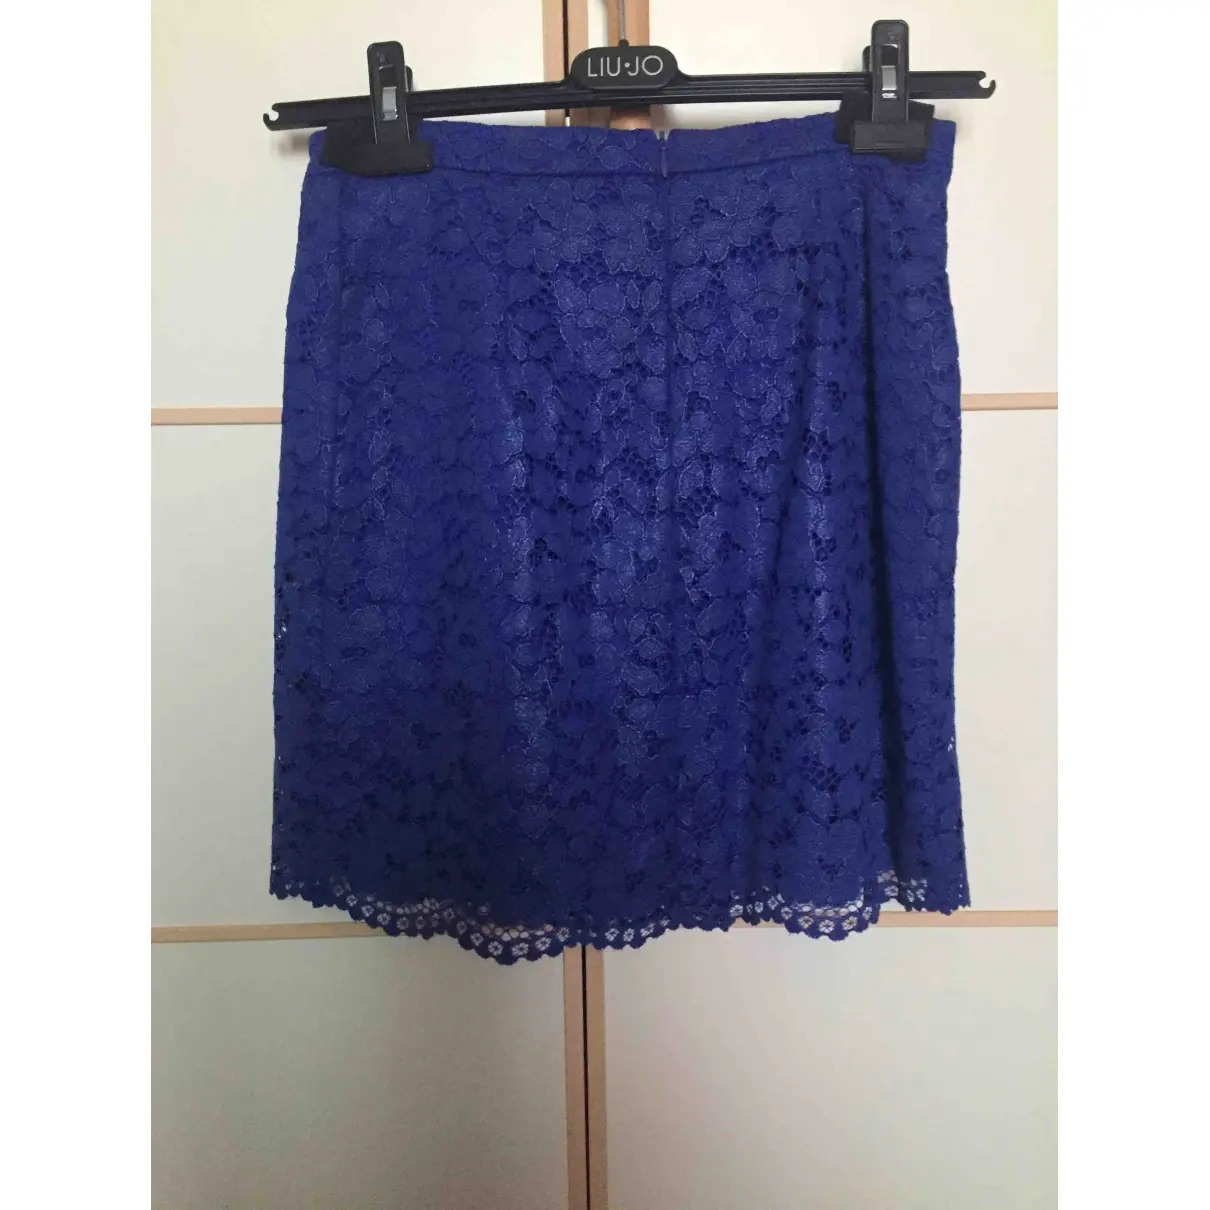 Liu.Jo Mini skirt for sale